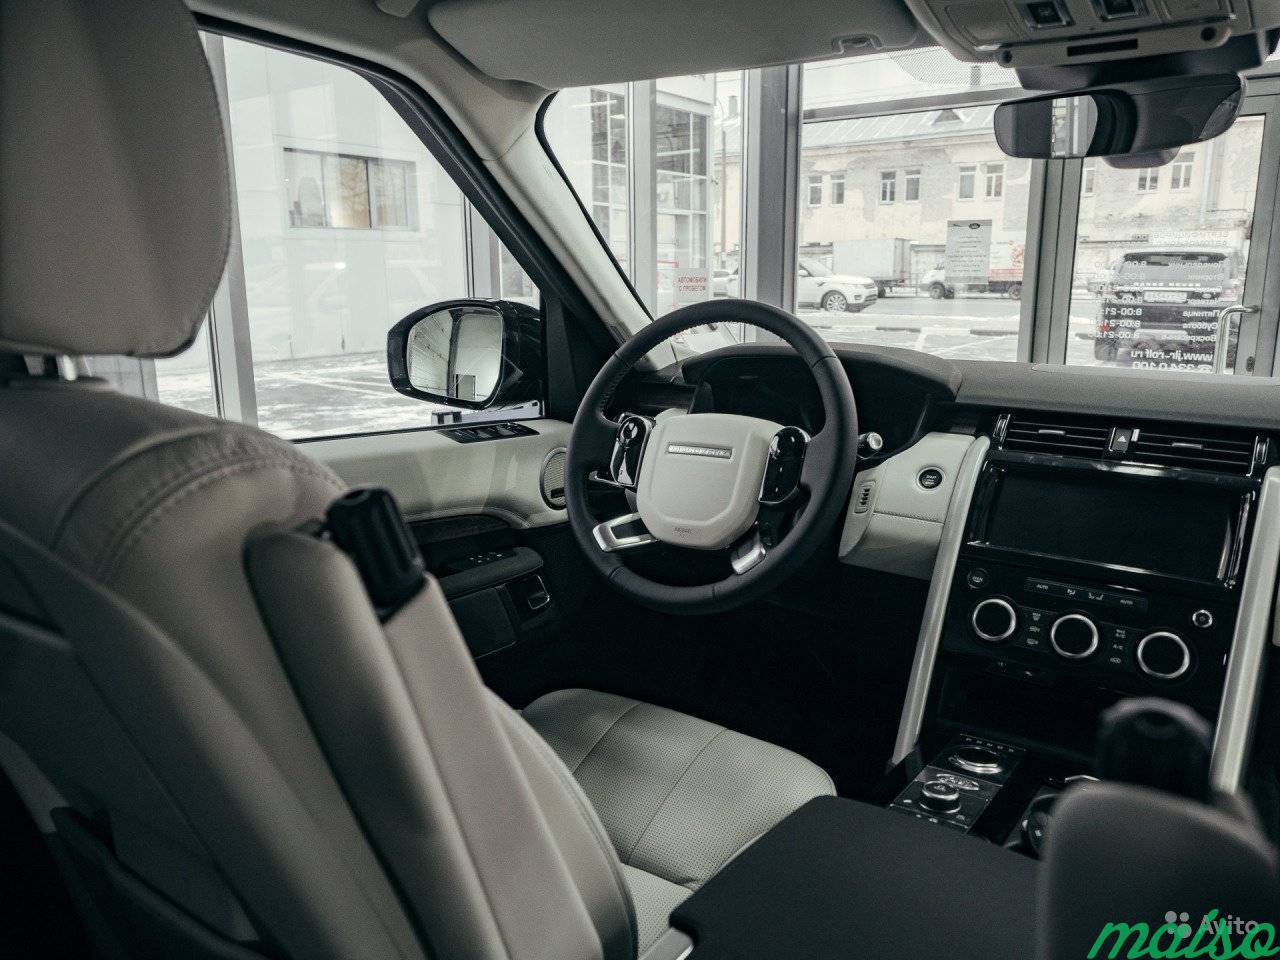 Land Rover Discovery 3.0 AT, 2018, внедорожник в Санкт-Петербурге. Фото 10